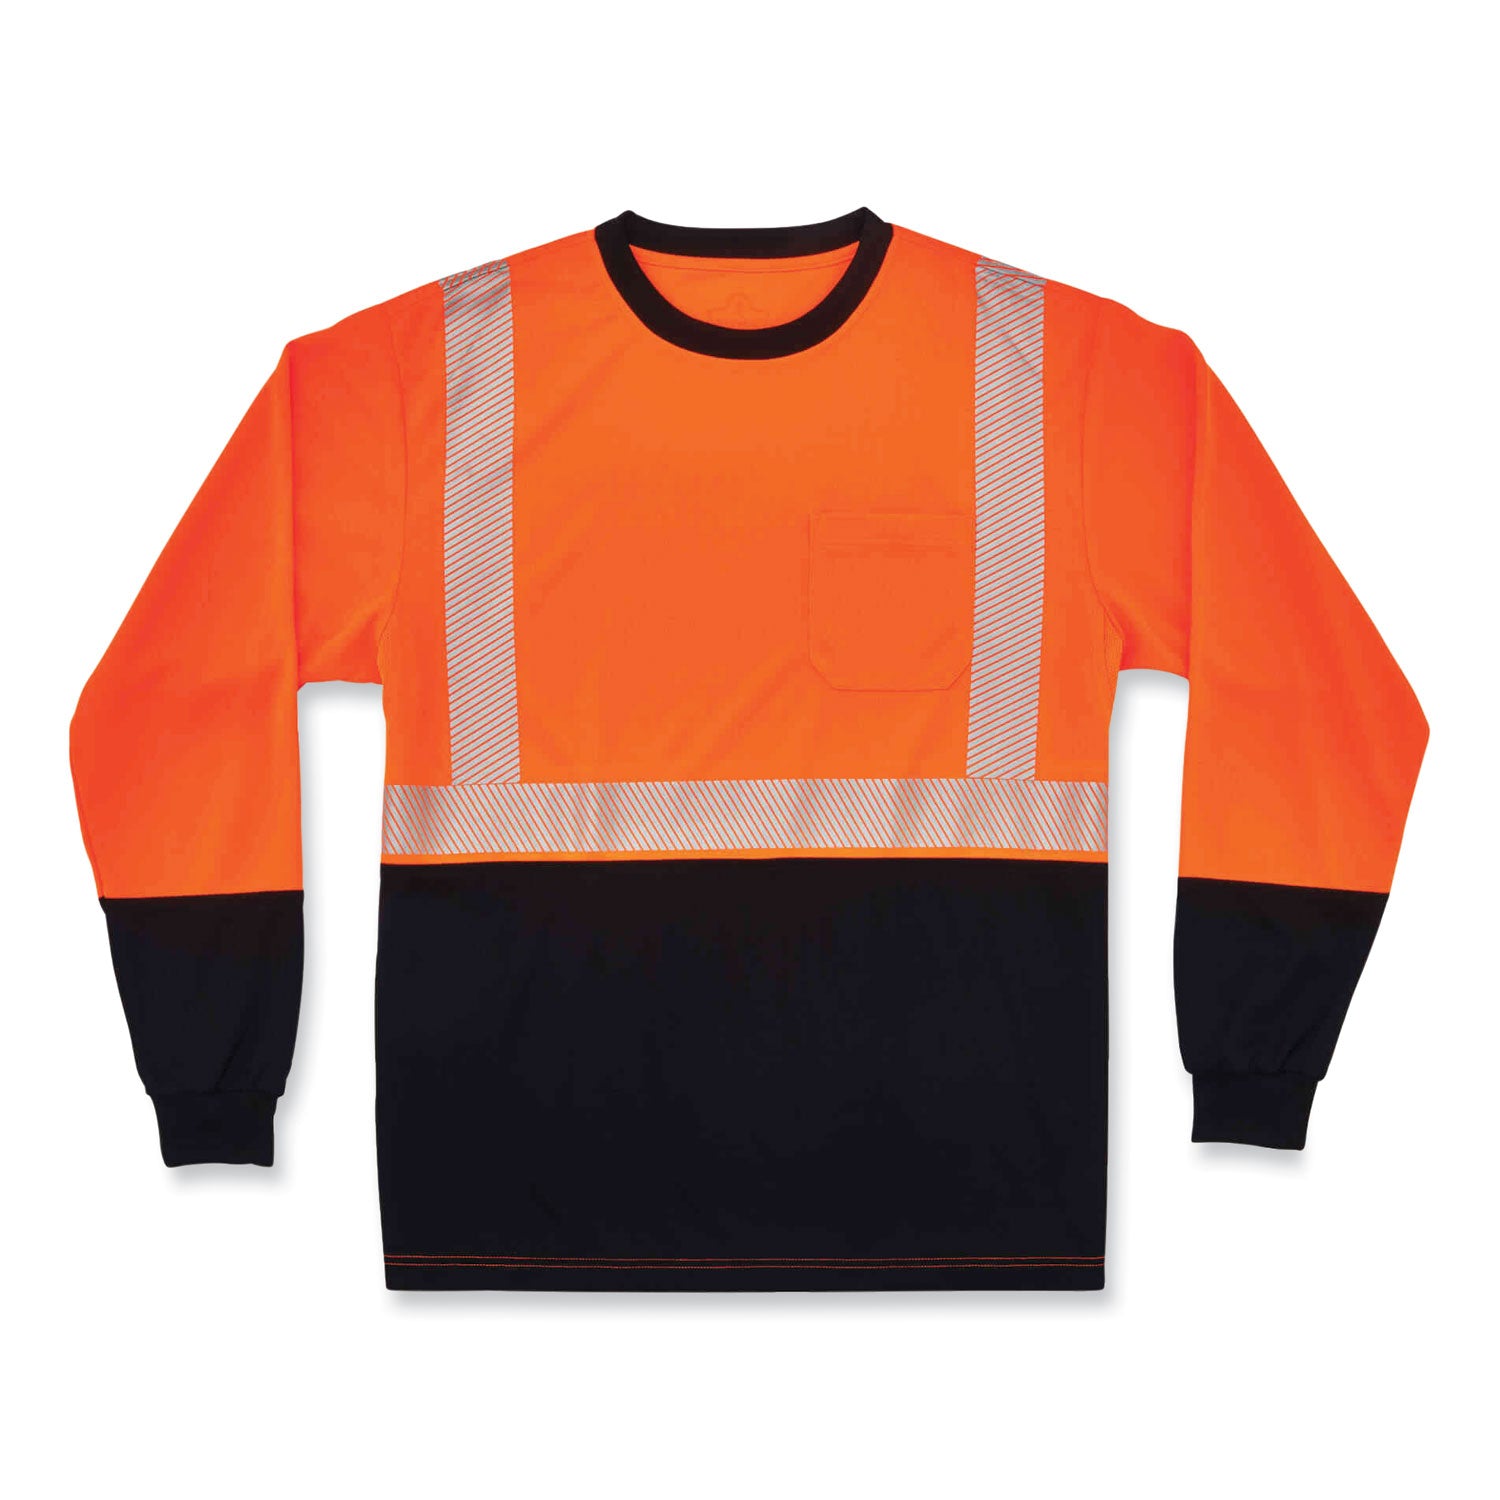 glowear-8281bk-class-2-long-sleeve-shirt-with-black-bottom-polyester-x-large-orange-ships-in-1-3-business-days_ego22685 - 1